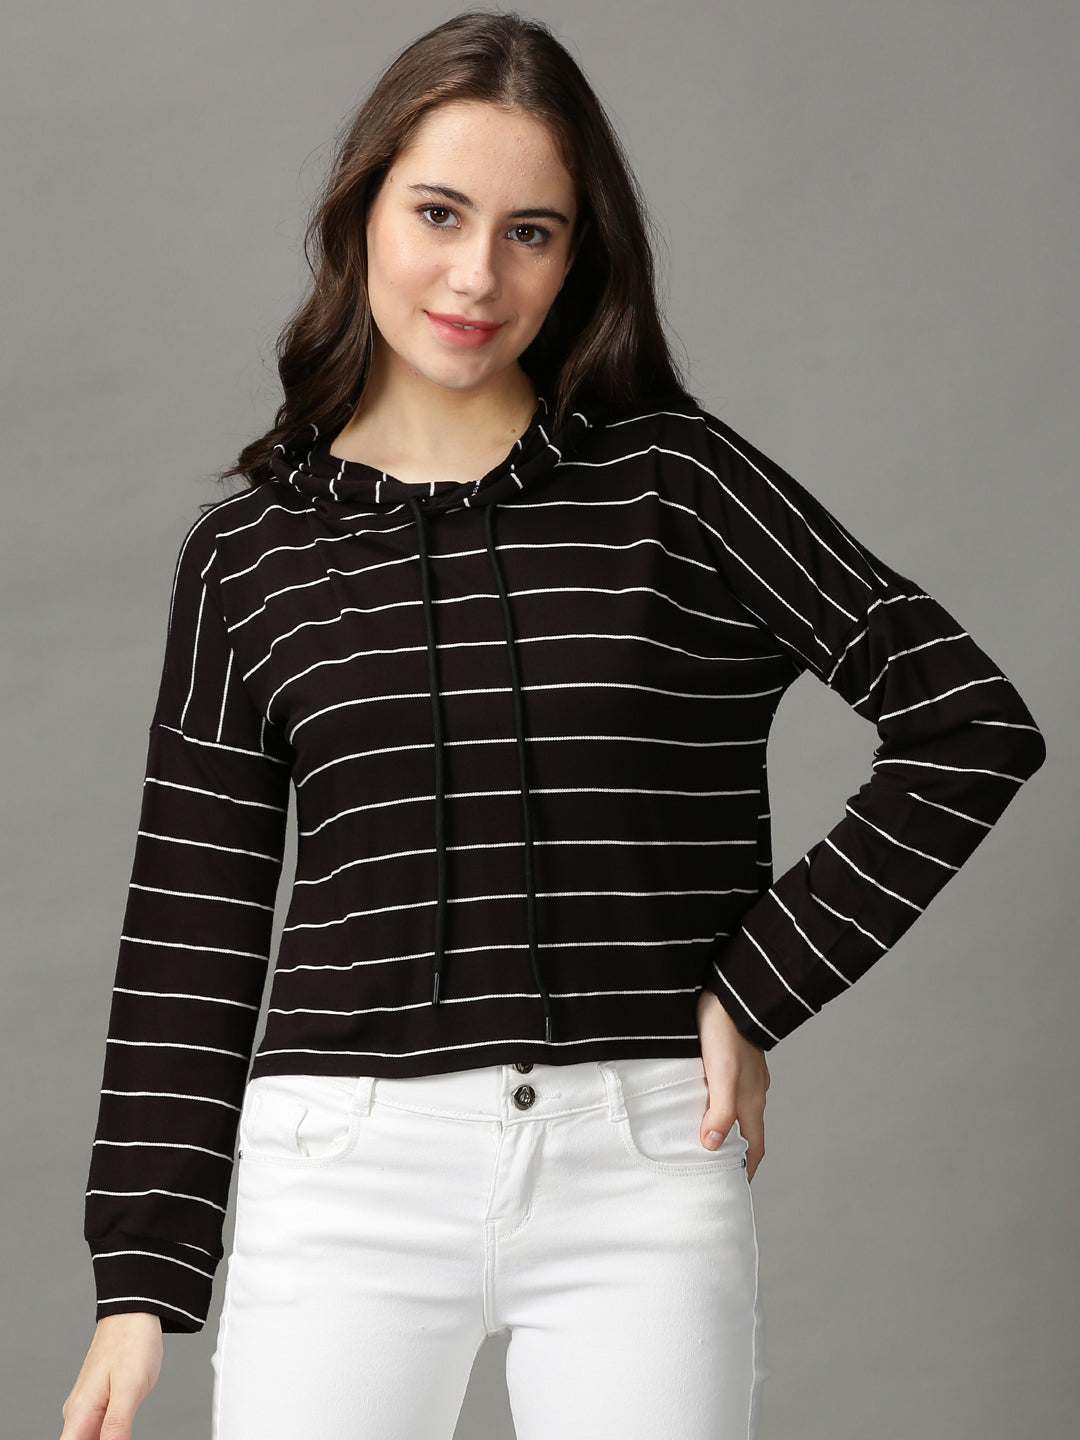 Women's Black Striped Crop Top